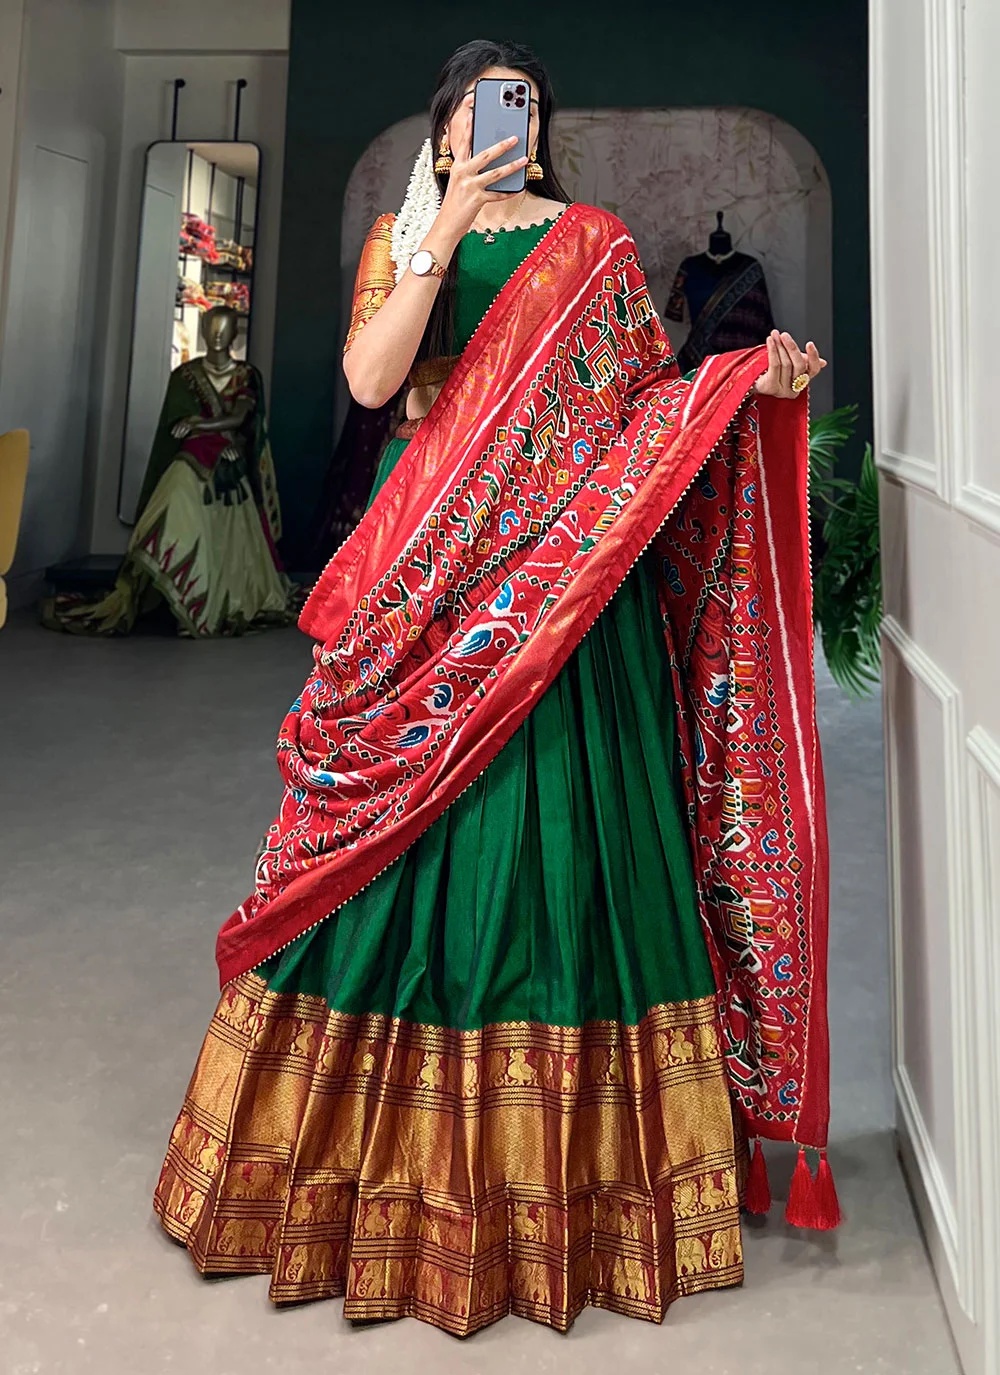 Indian Dresses Online: Explore the Exquisite Collection at SareeSaga